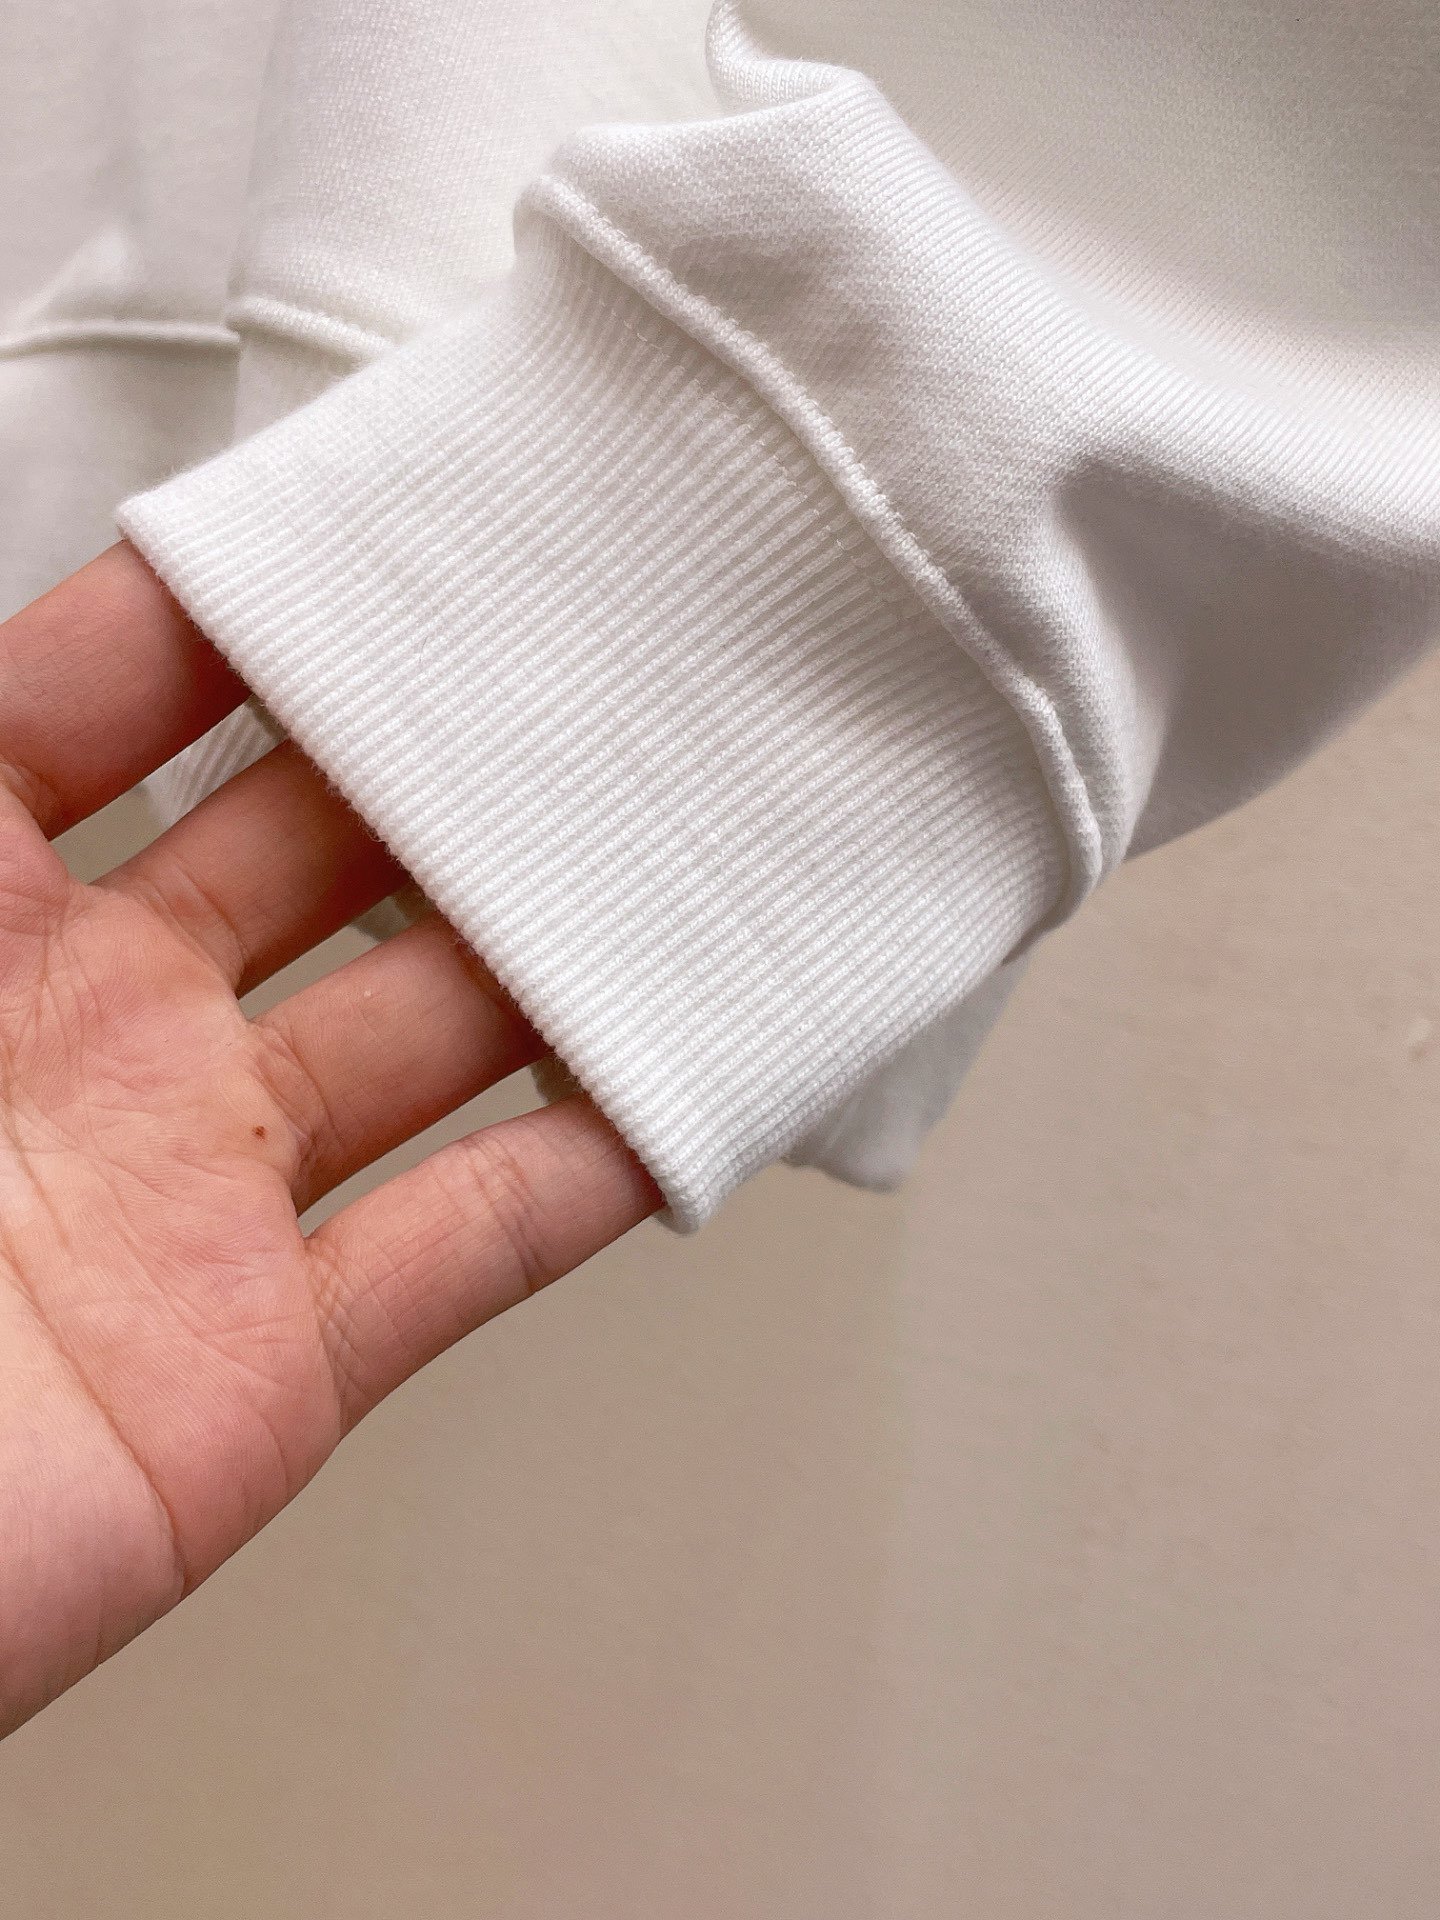 Pk家23SS最新最顶级版本胸前立体大眼睛字母kenzo图案精美工艺圆领卫衣最顶级的品质专柜原单套头衫顶